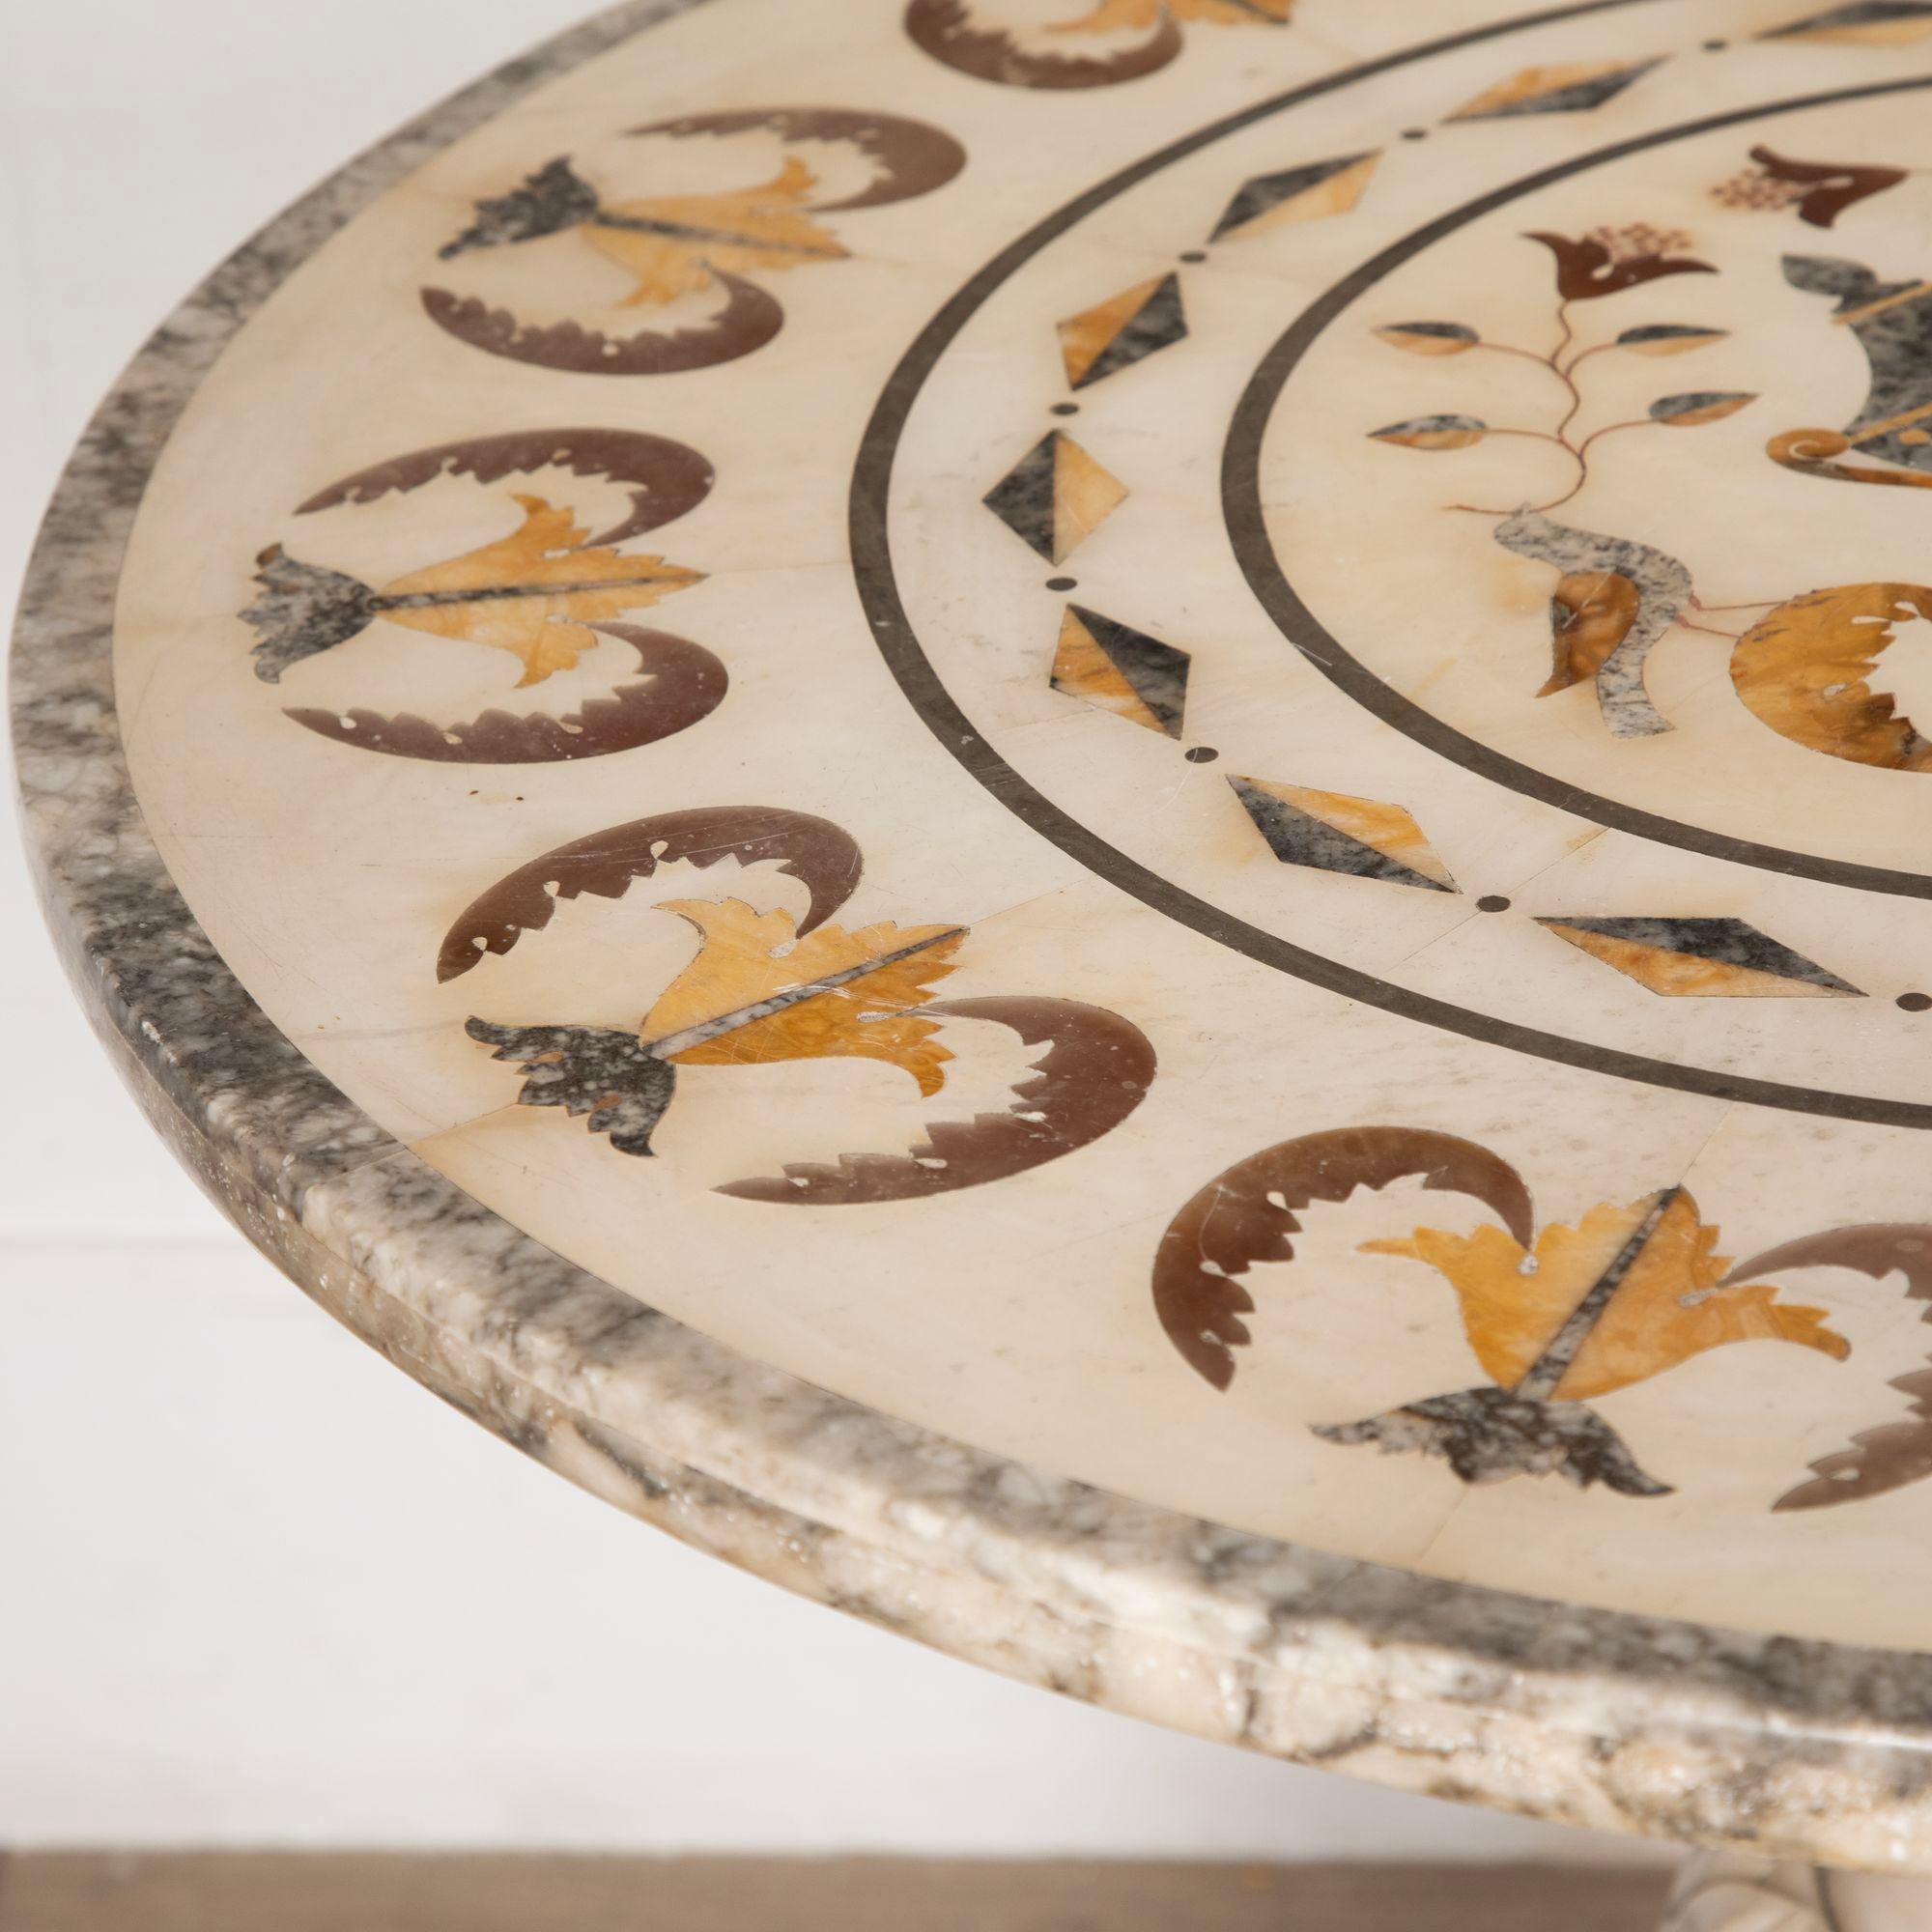 19th Century Italian Alabaster centre table with 'pietra dura' special marble inlaid top.
Circa 1880.